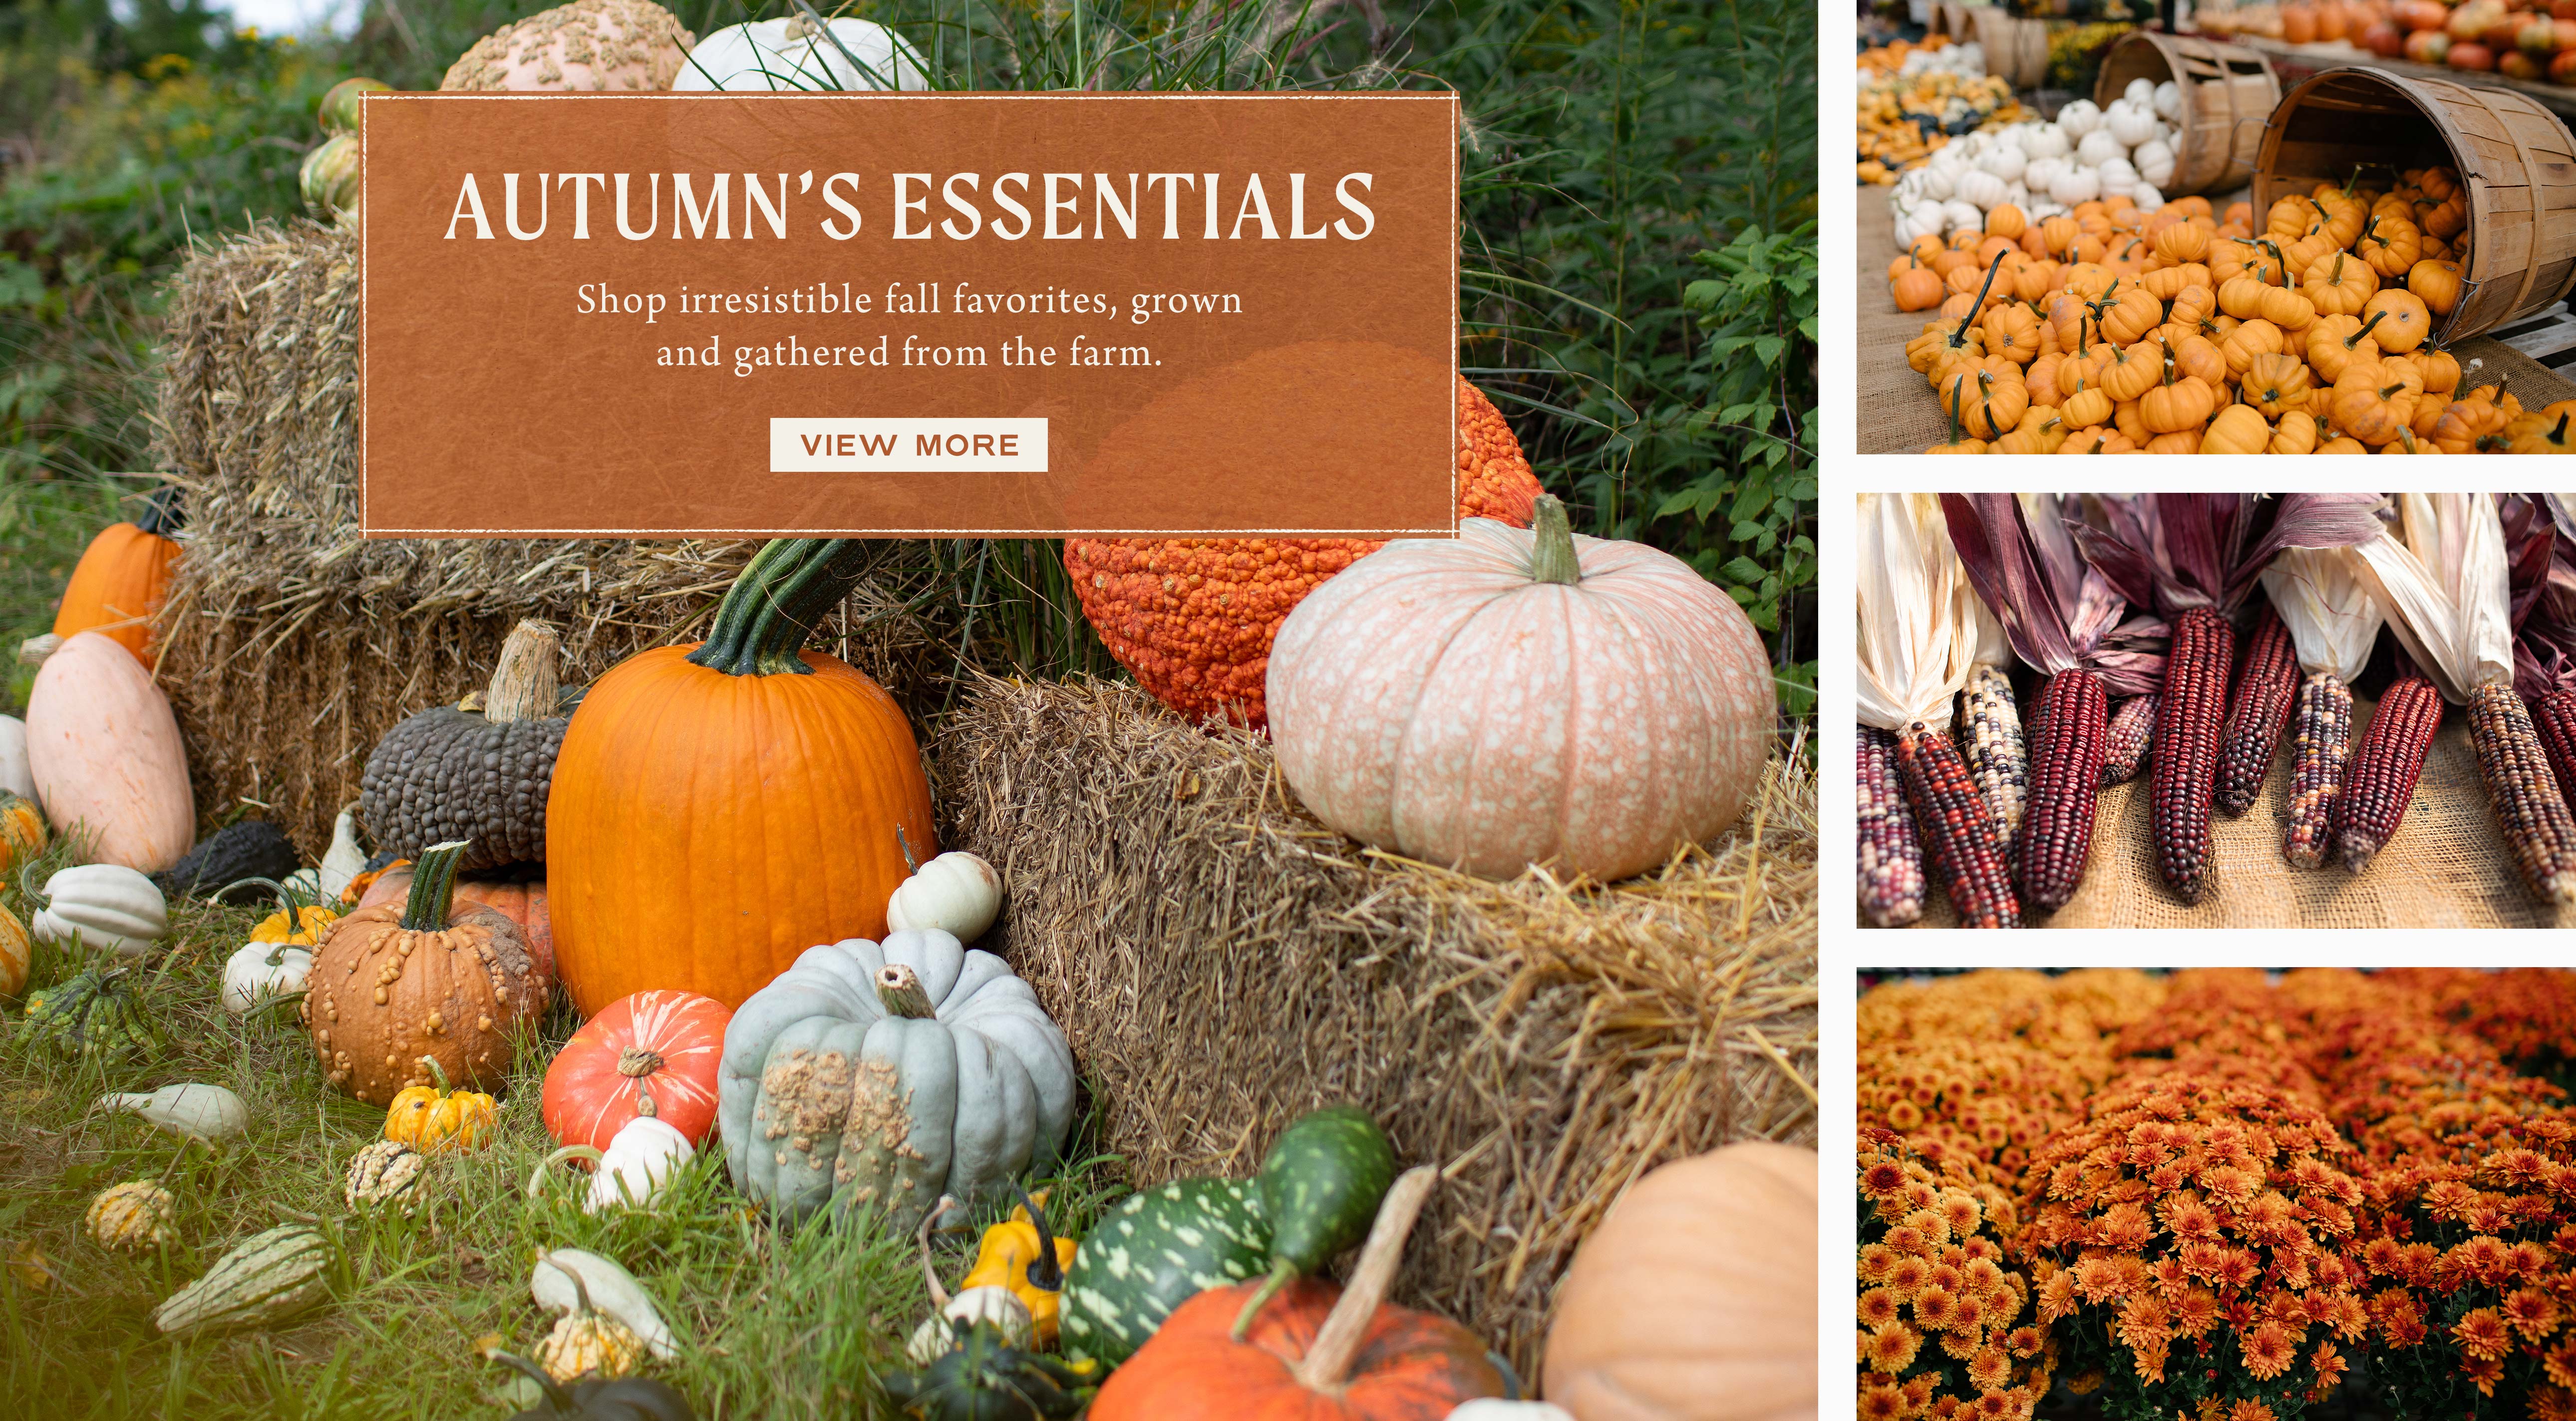 Autumn's Essentials at Hoen's Garden Center